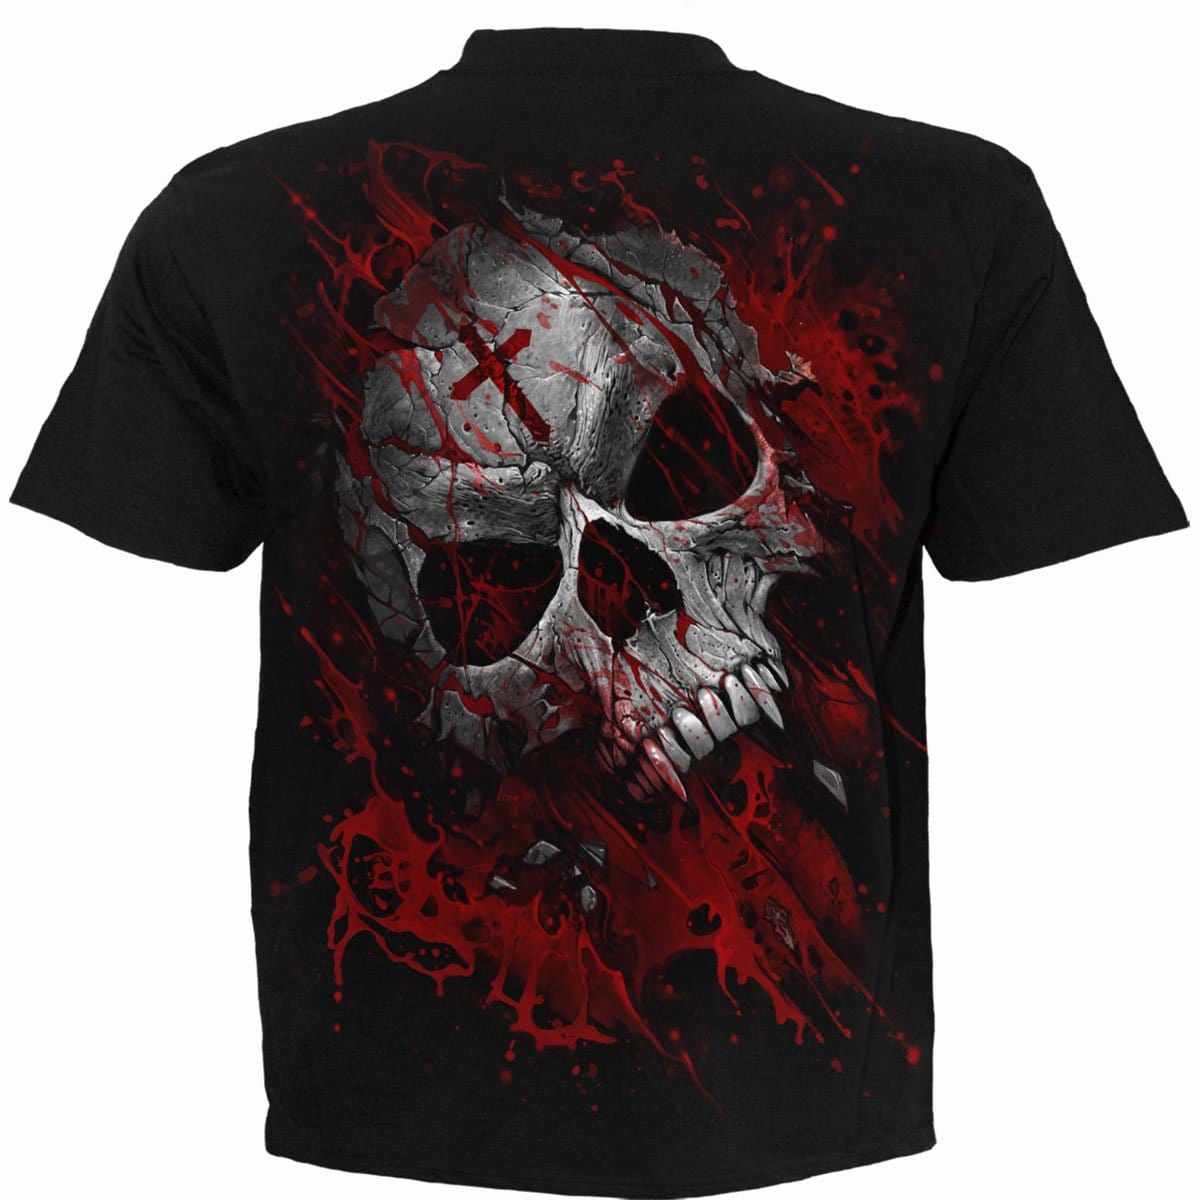 PURE BLOOD - T-Shirt Black - Spiral USA